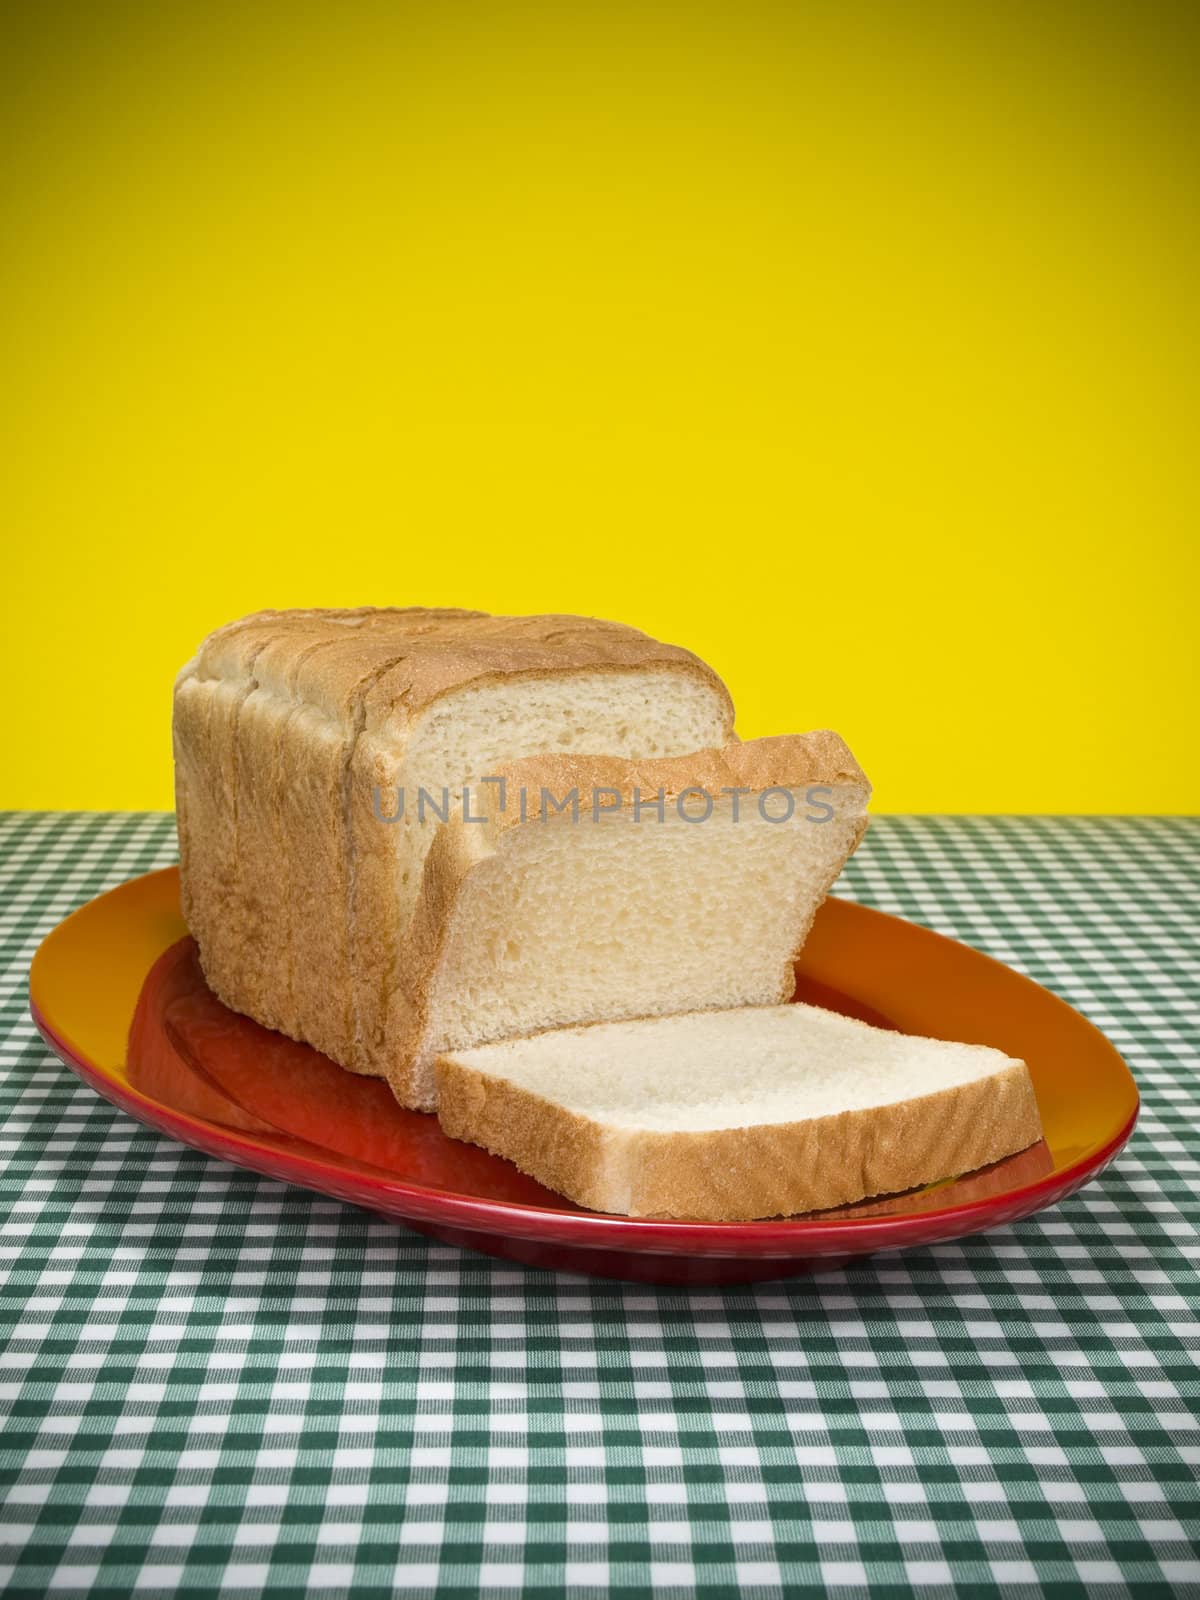 A loaf of sliced bread served on a red platter.